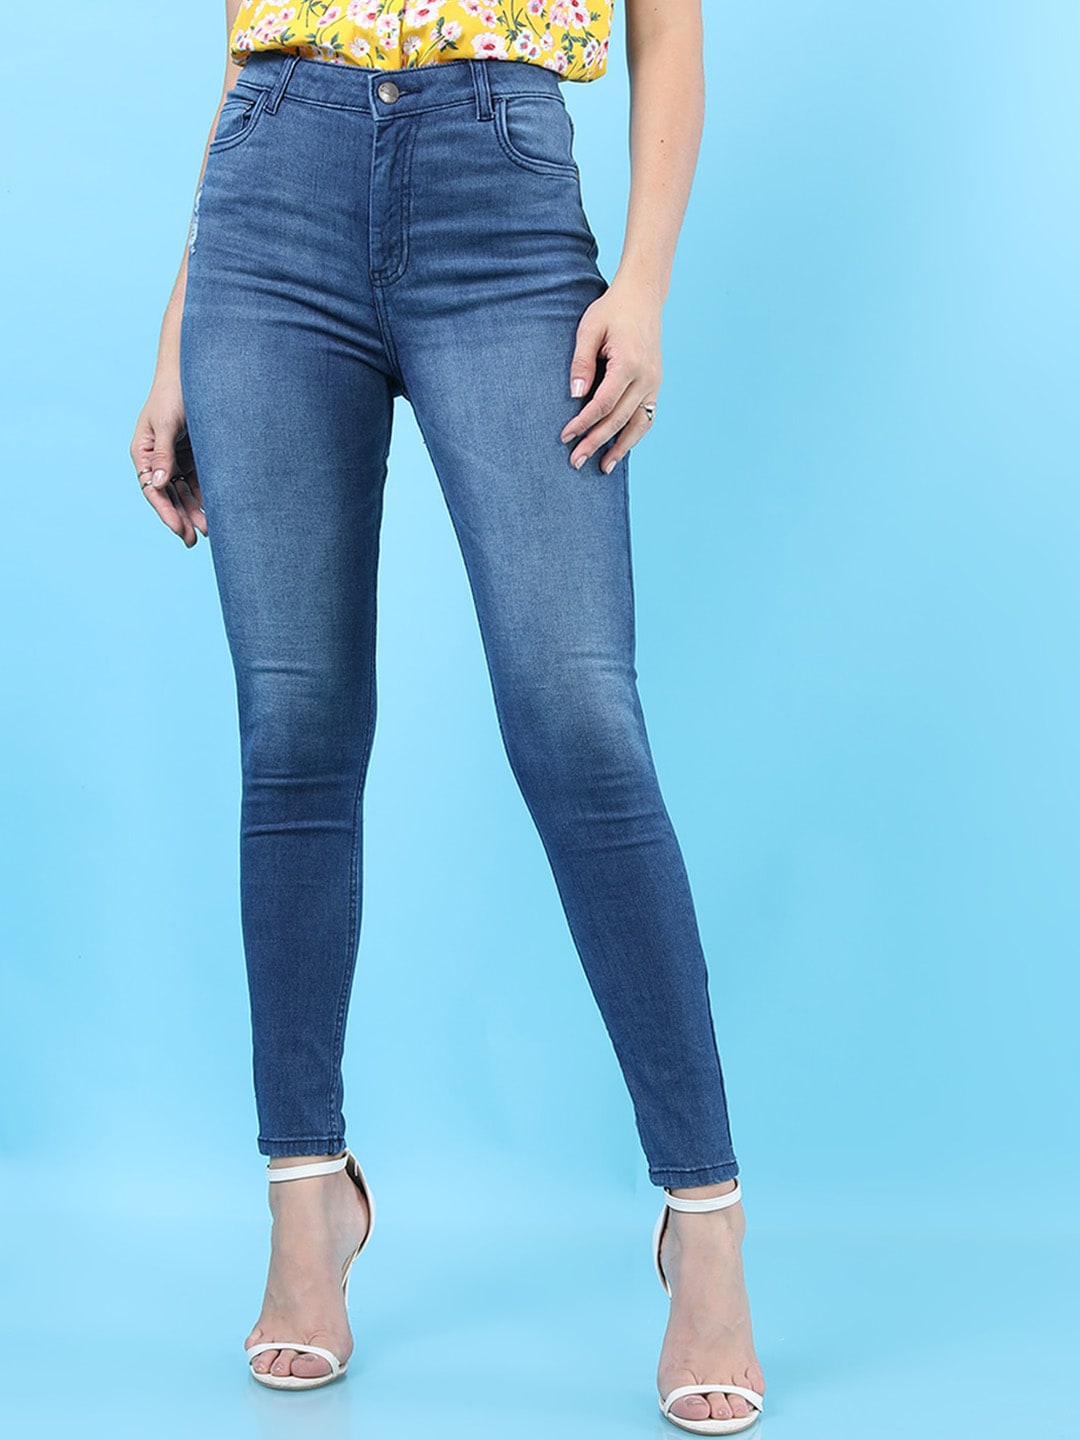 Shop Women Solid Jeans Online.